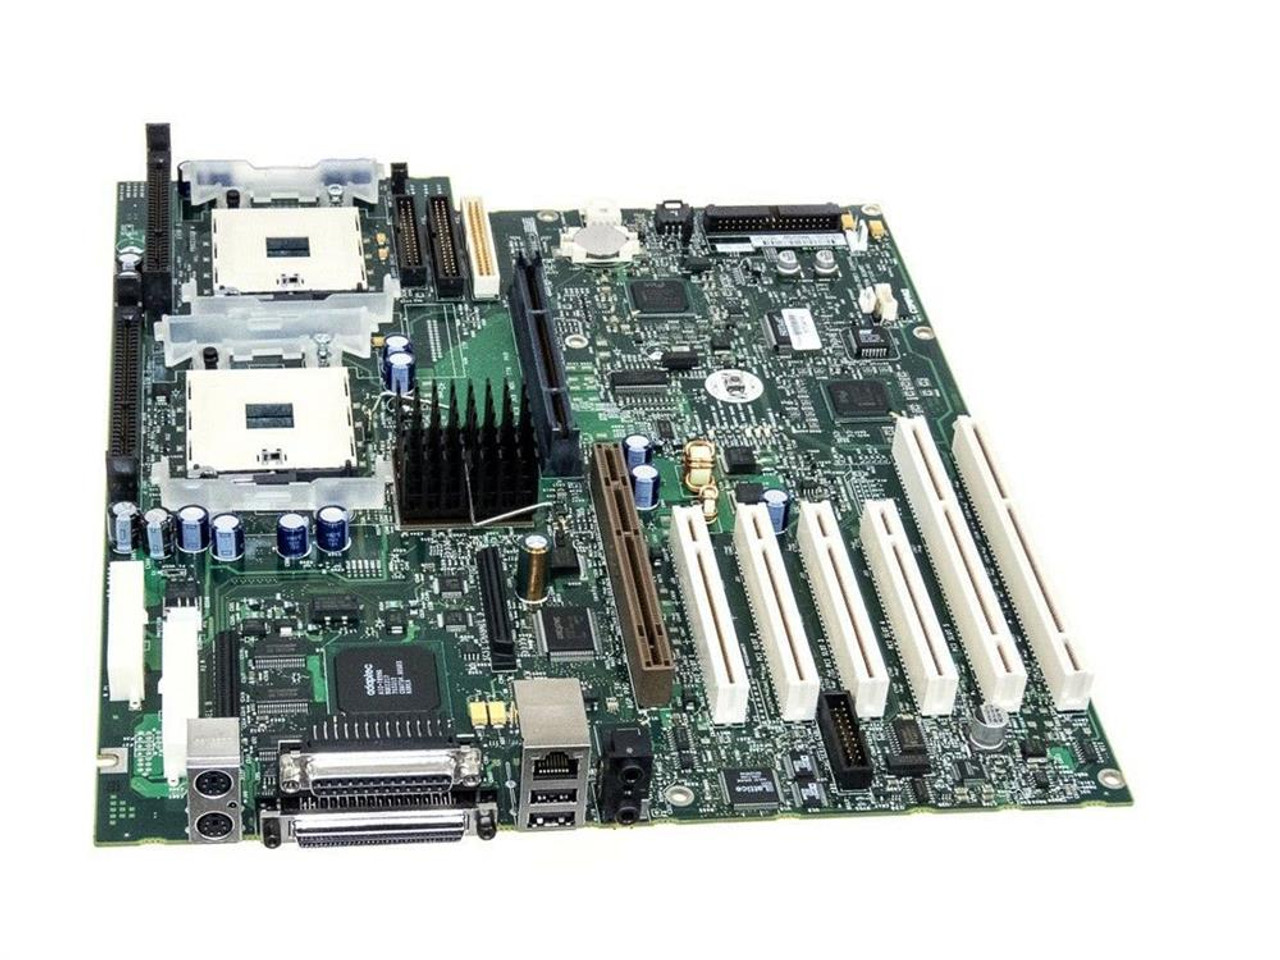 291367-001 Compaq System Board (Motherboard) for EVO W8000 Professional Workstation (Refurbished)